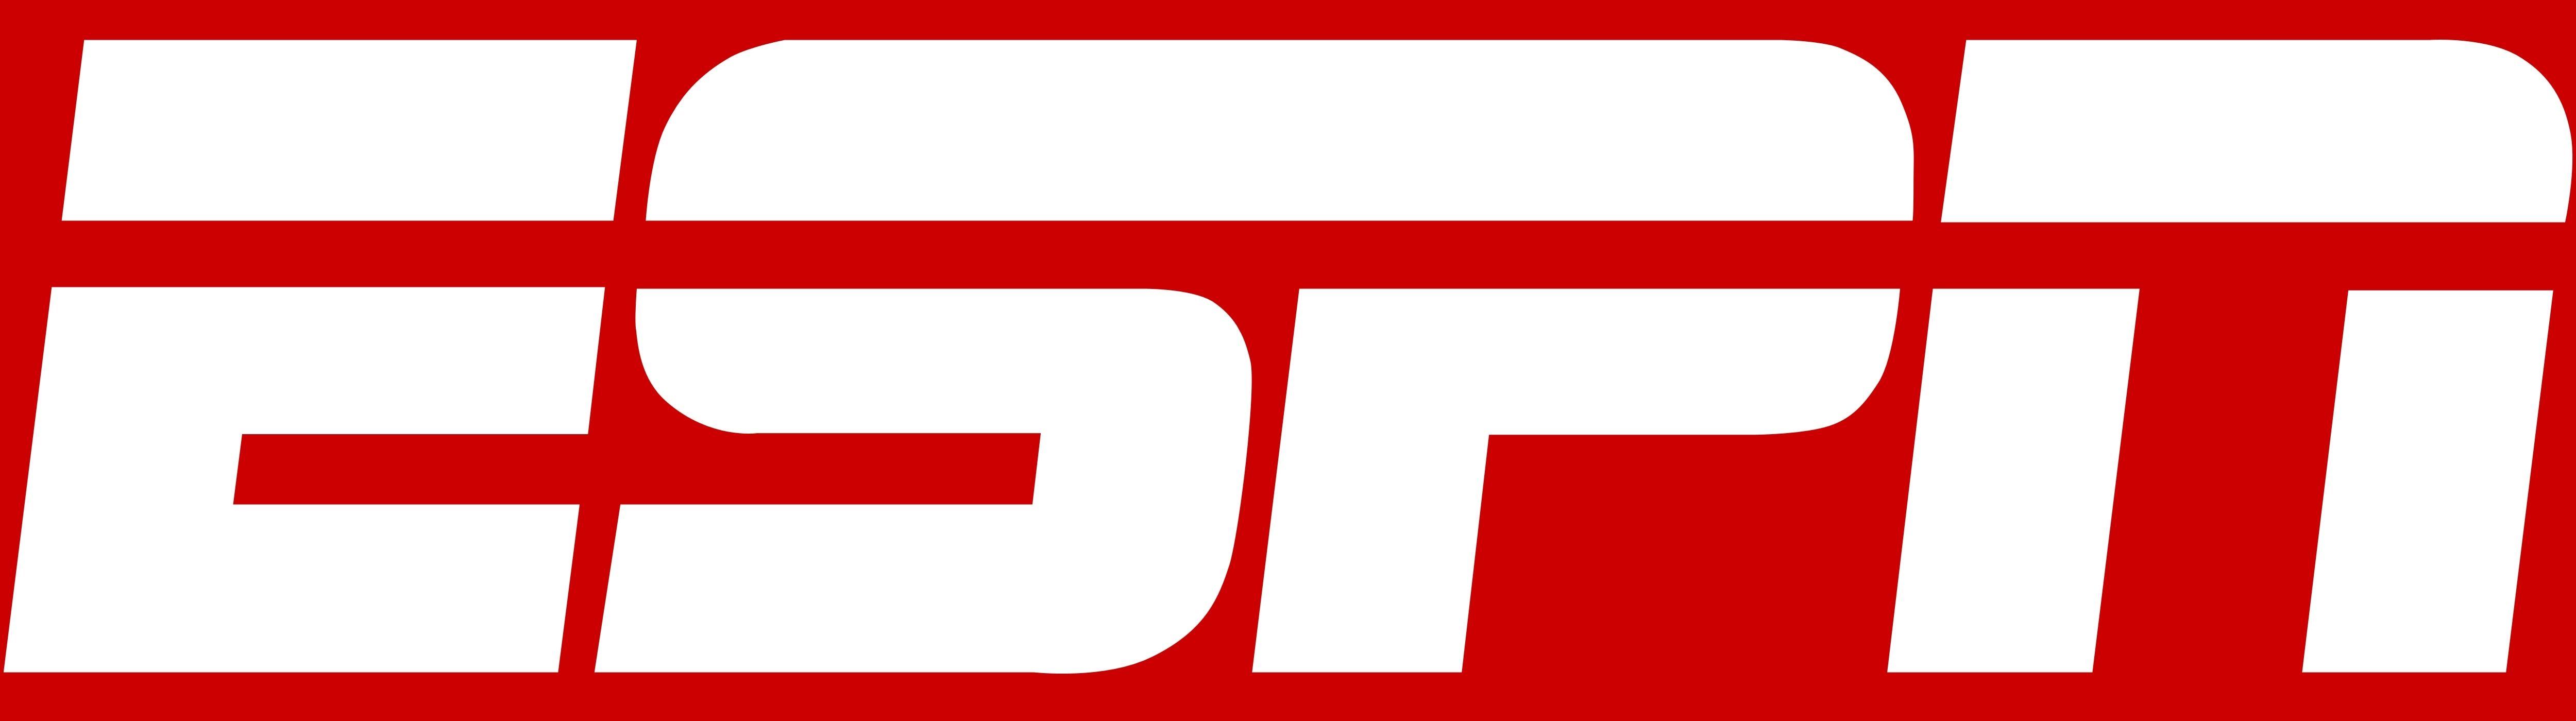 ESPN Magazine Logo - ESPN Corporate Office Headquarters & Customer Service Info